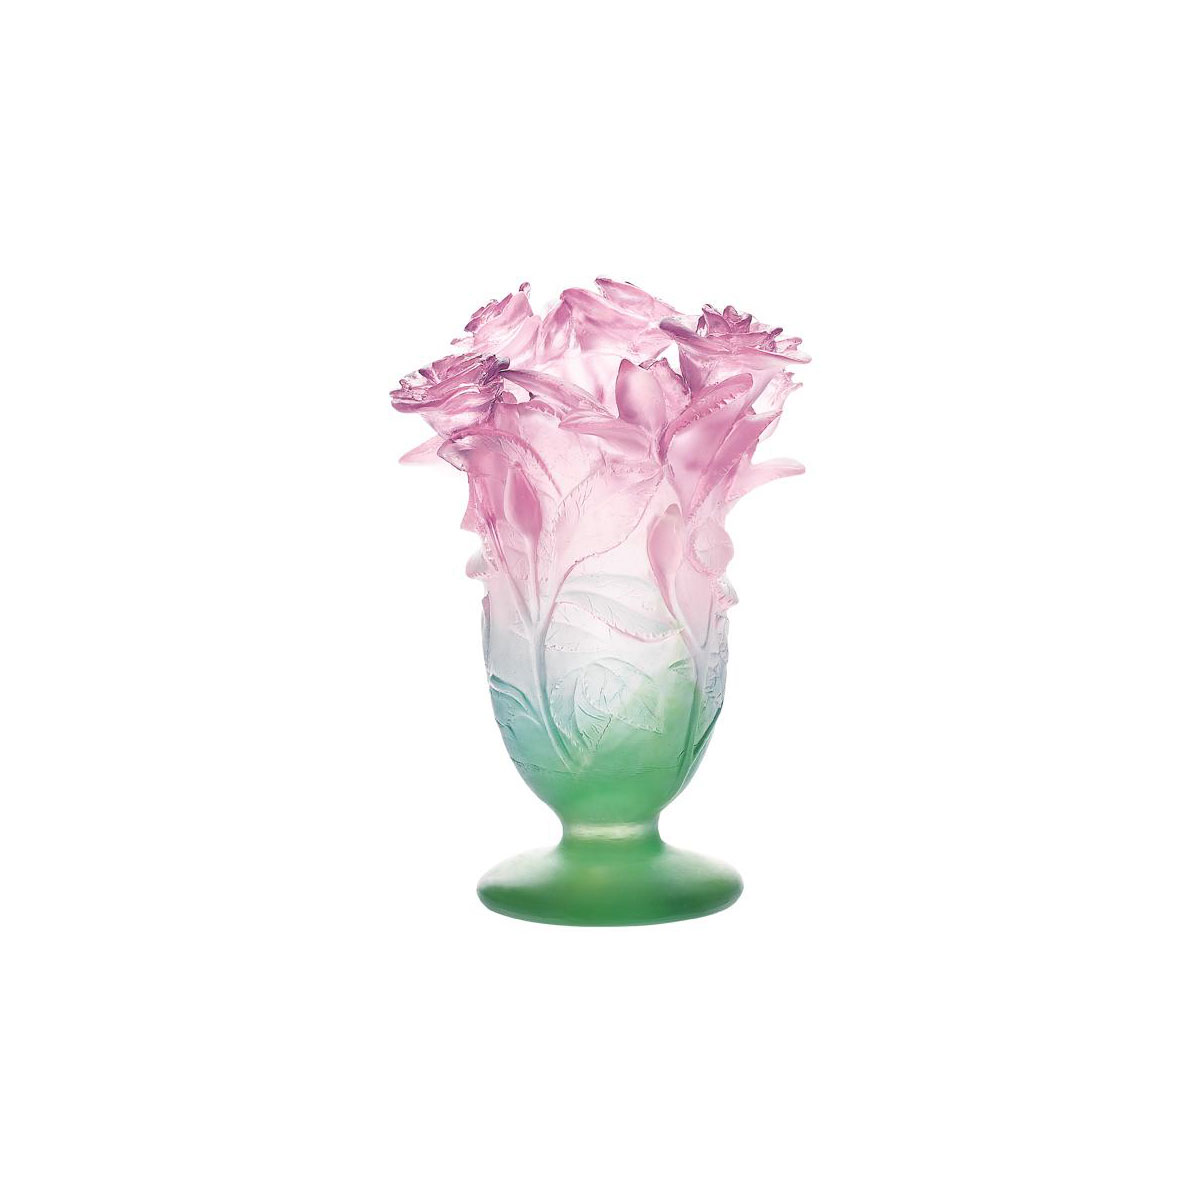 Daum 6.9" Roses Vase in Green and Pink